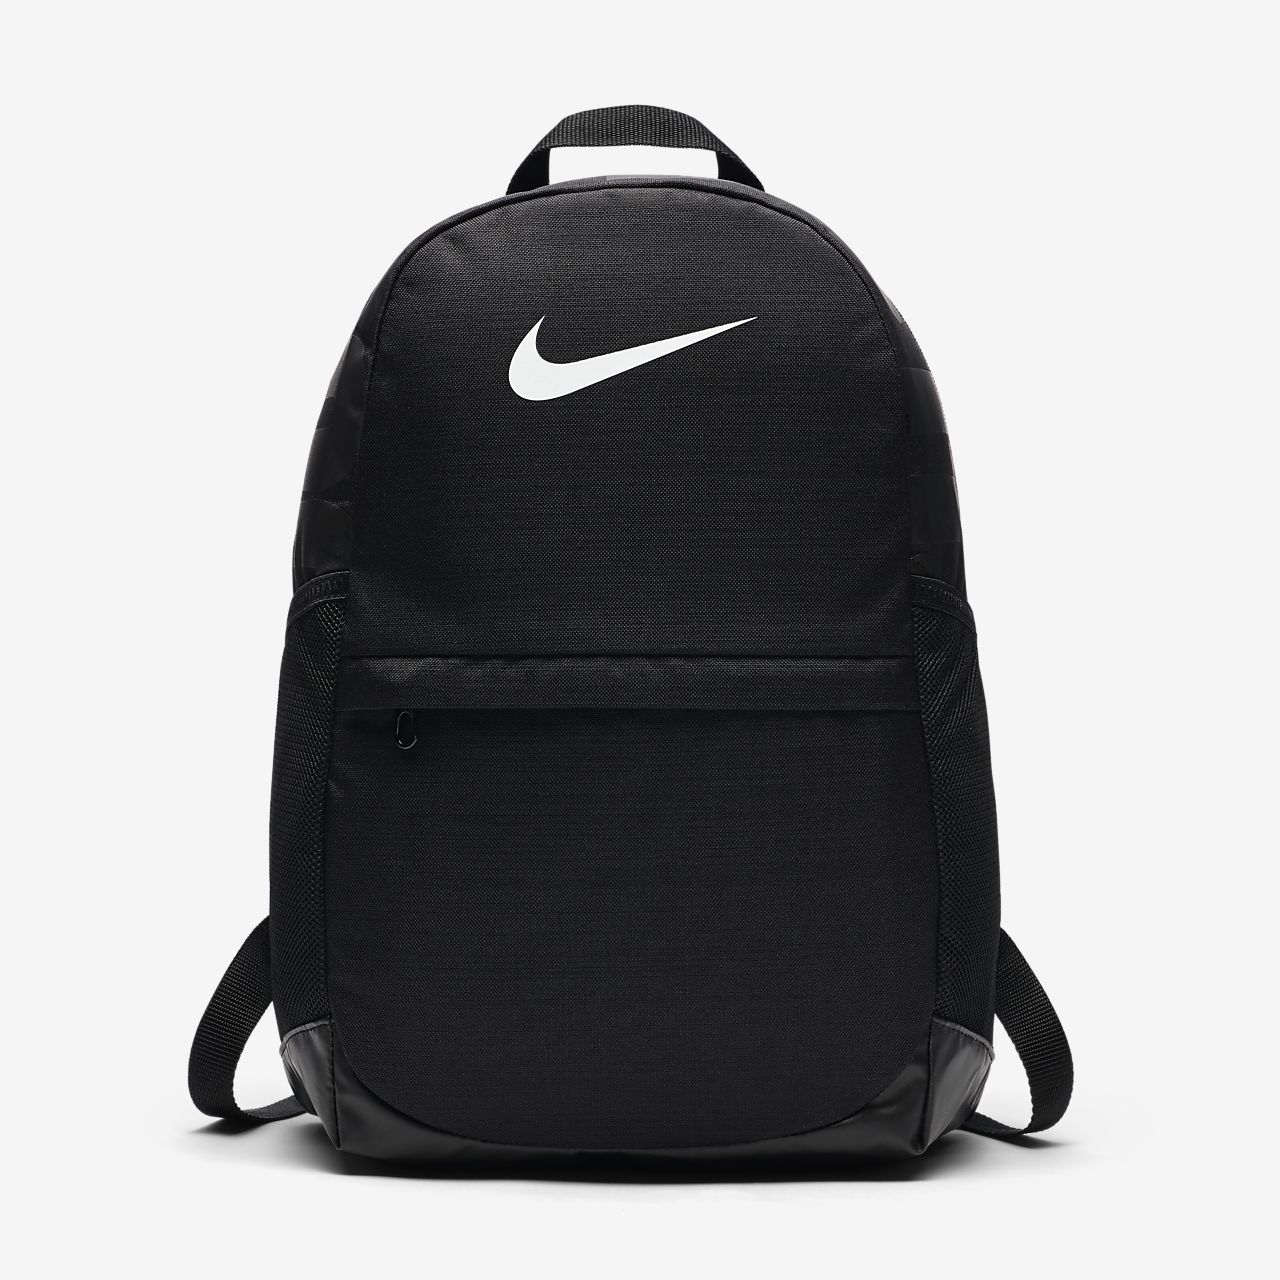 nike 2017 brasilia xl backpack for sale